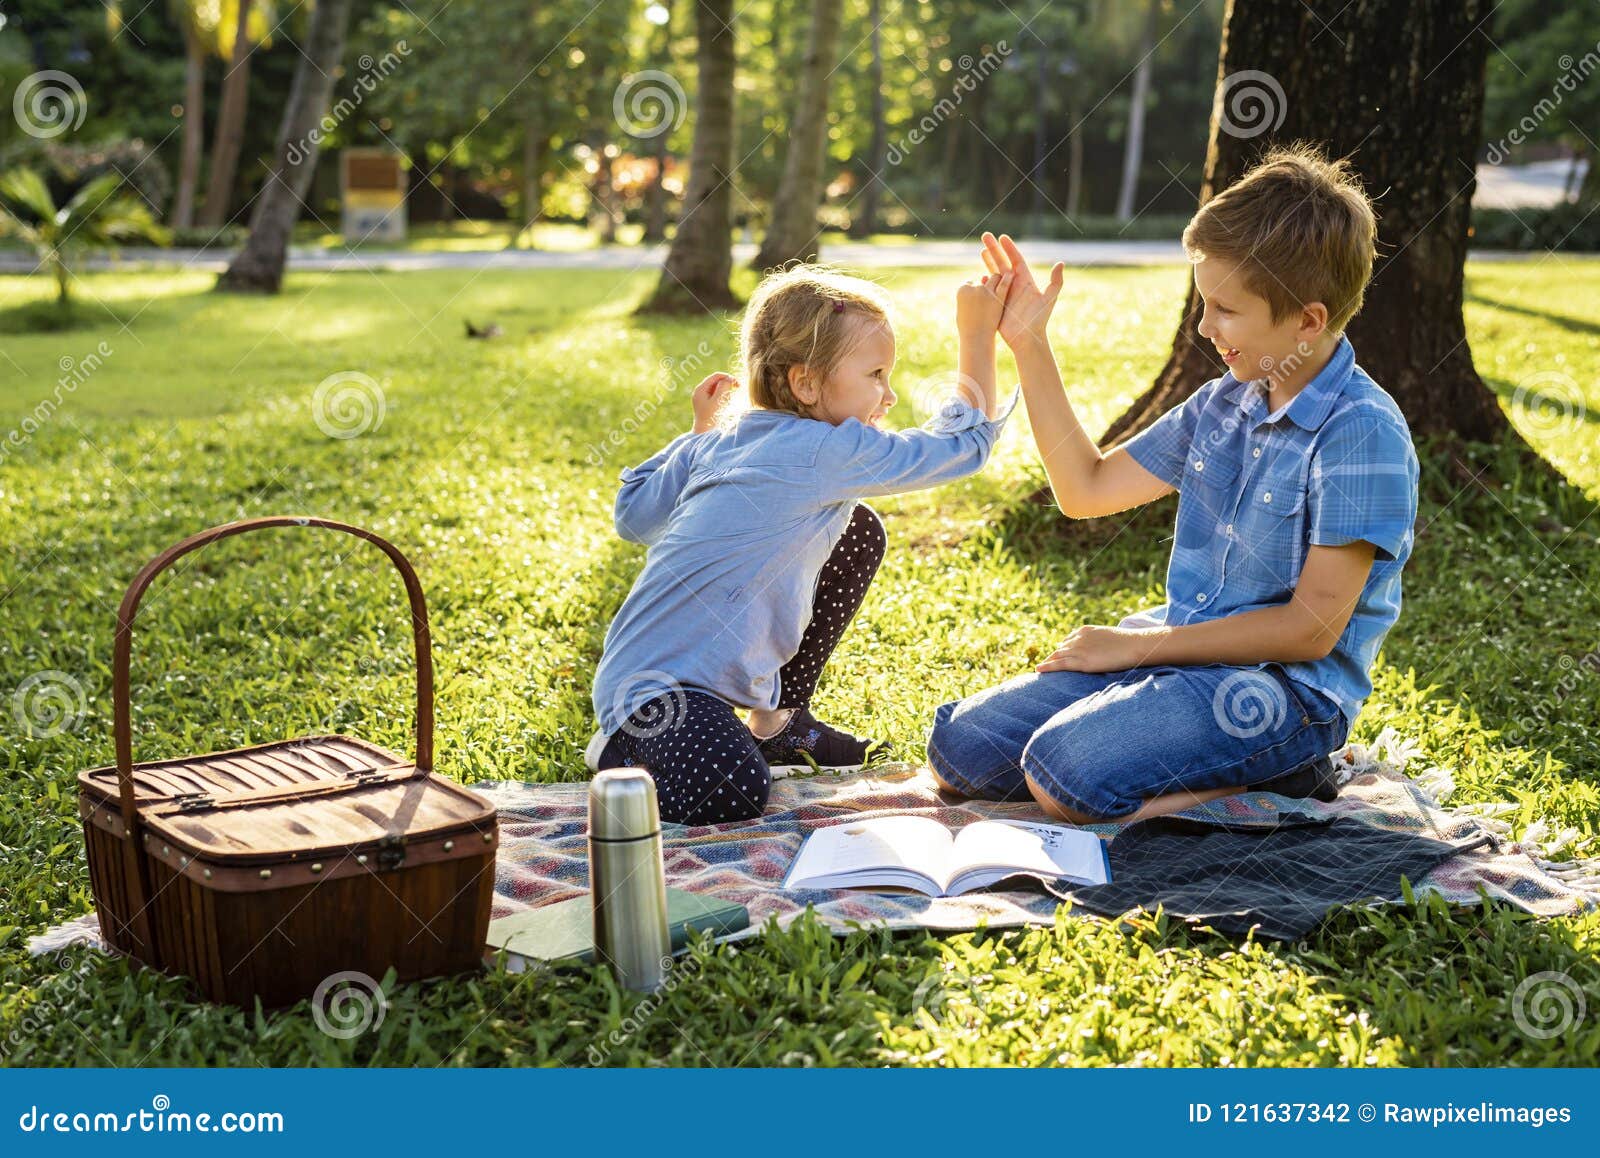 She s in the park. Дети в парке. Дети играют в парке. Играющие дети в парке. Парк для детей.